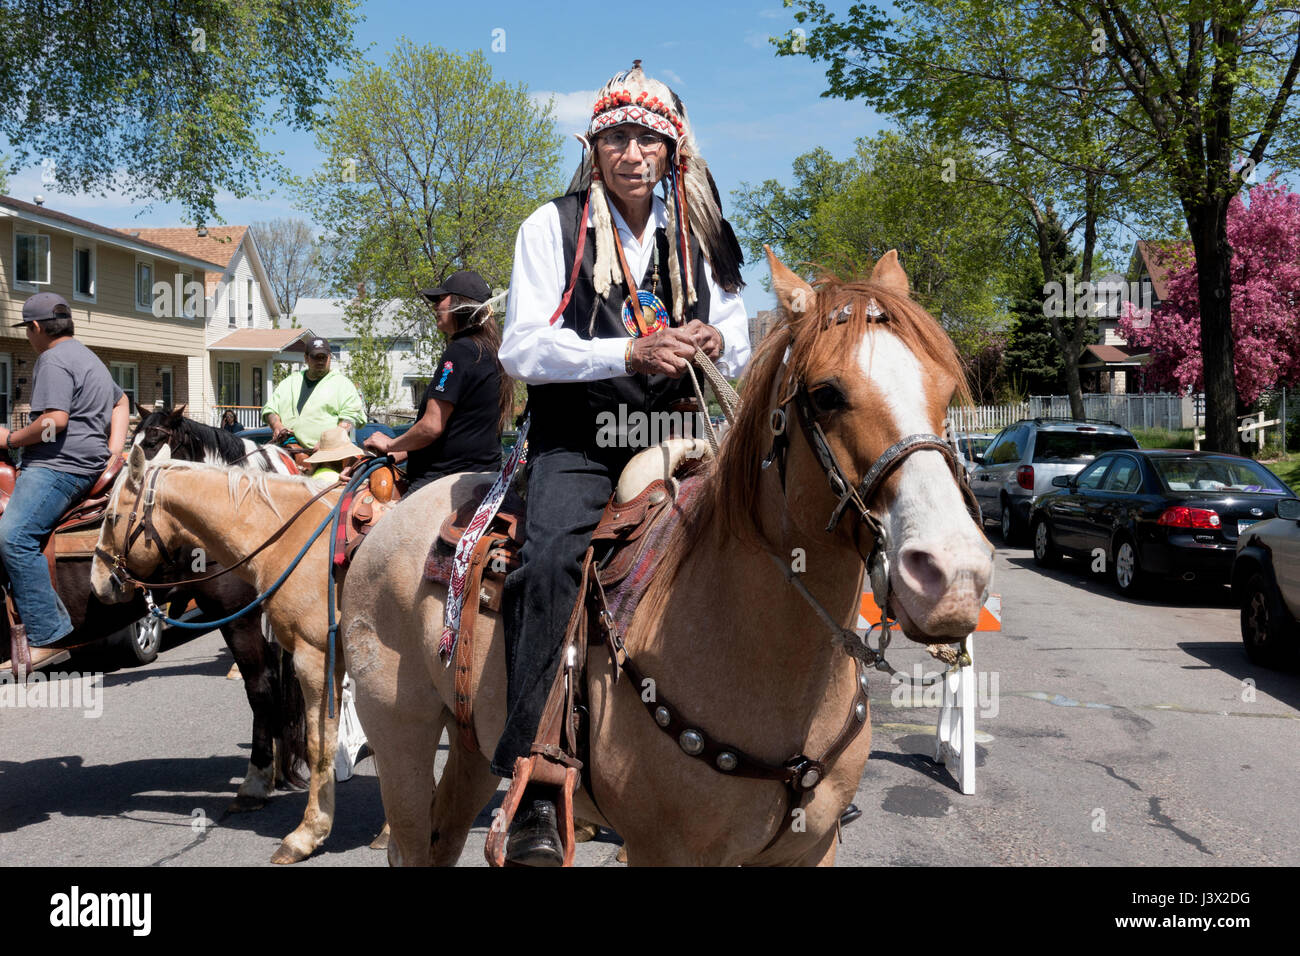 Minneapolis, Minnesota, USA. 7 de mayo de 2017. Native American con penacho plumado a caballo en la 43ª Anual de la MayDay Parade, mayo 7th, 2017 MN de Minneapolis, Minnesota, EE.UU. Crédito: Steve Skjold/Alamy Live News Foto de stock